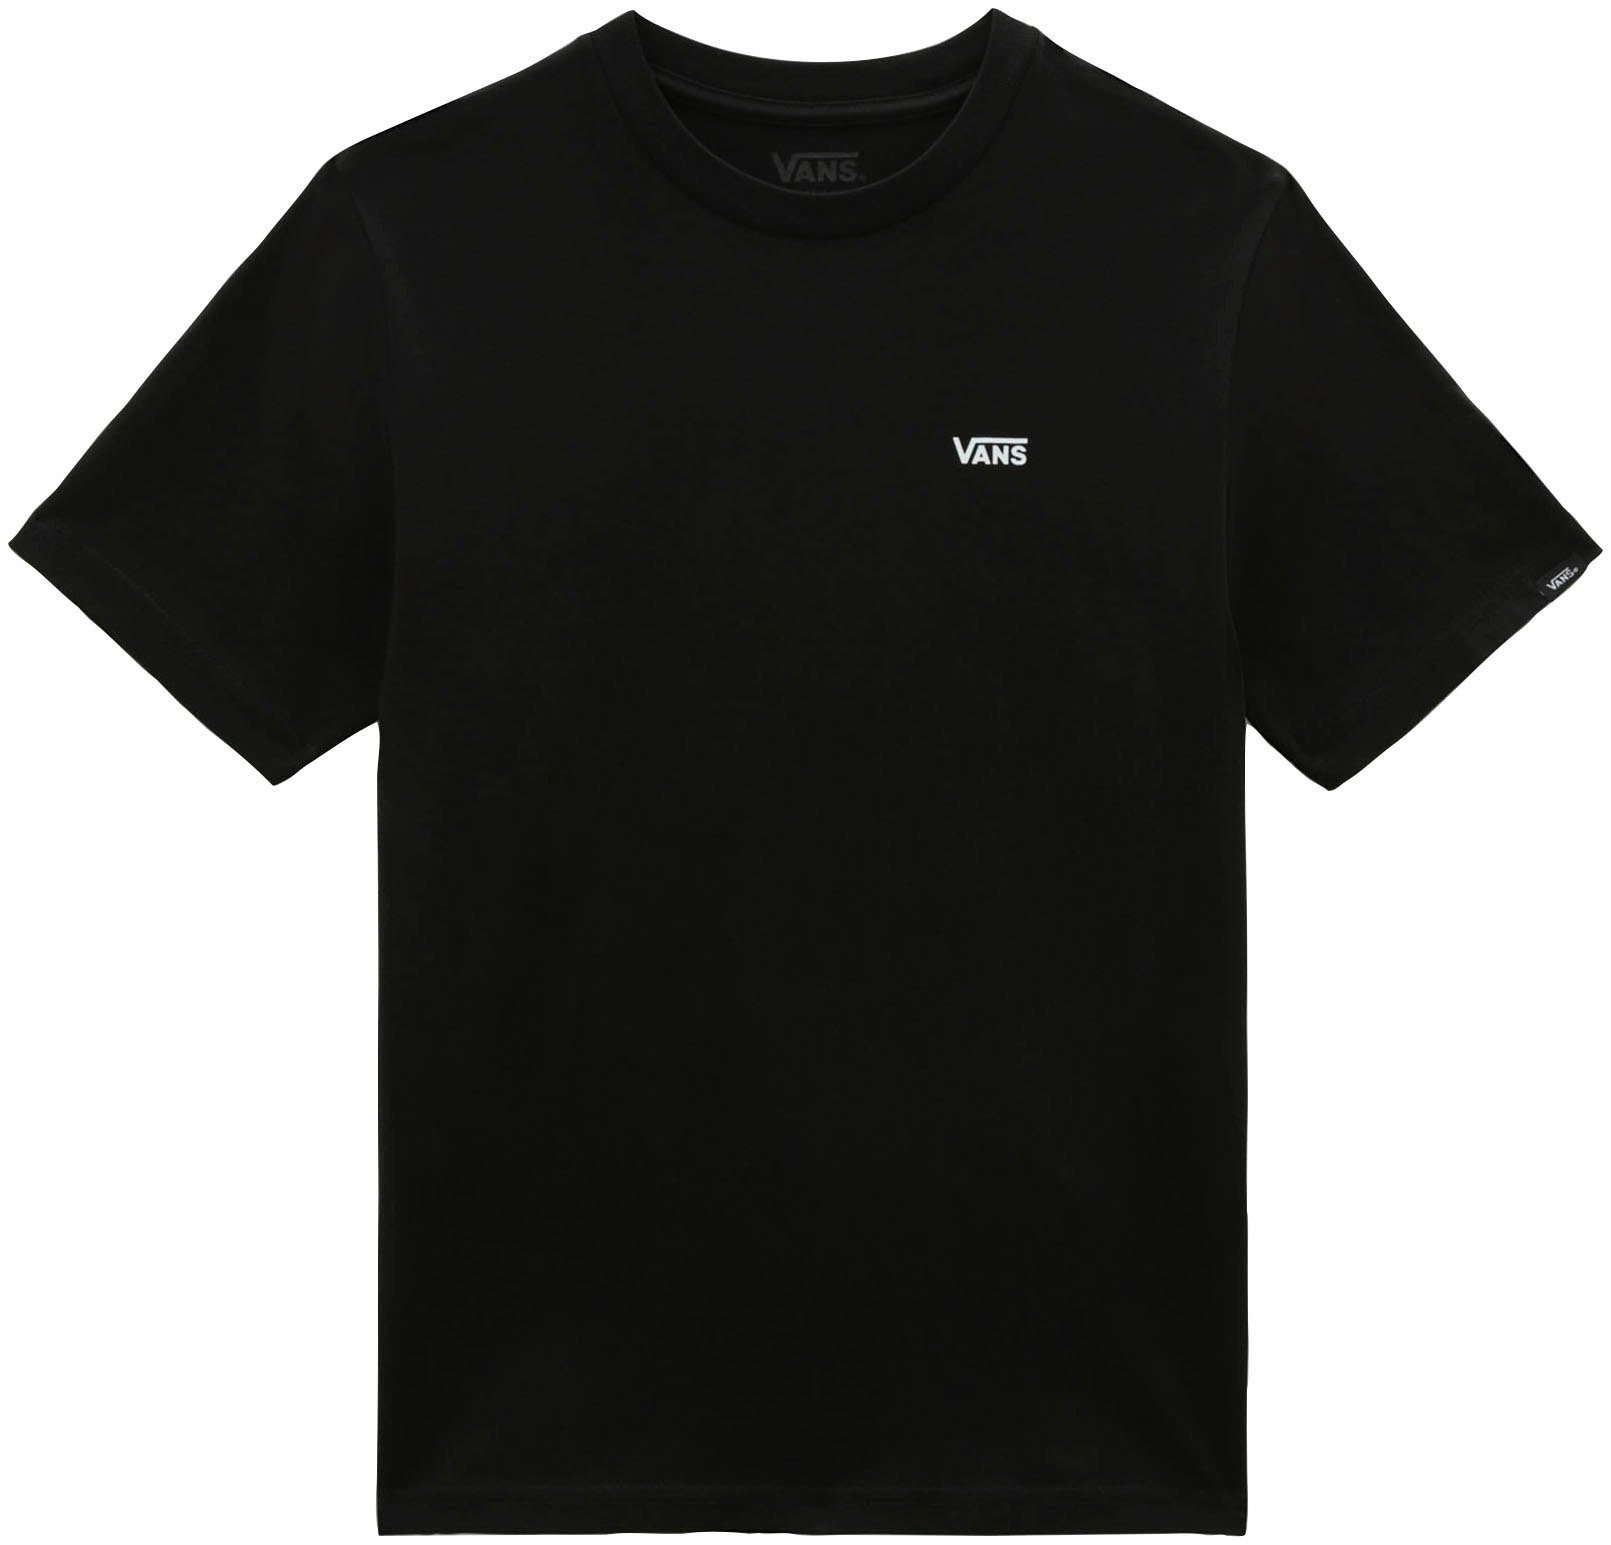 BOYS CHEST T-Shirt Vans black TEE BY LEFT